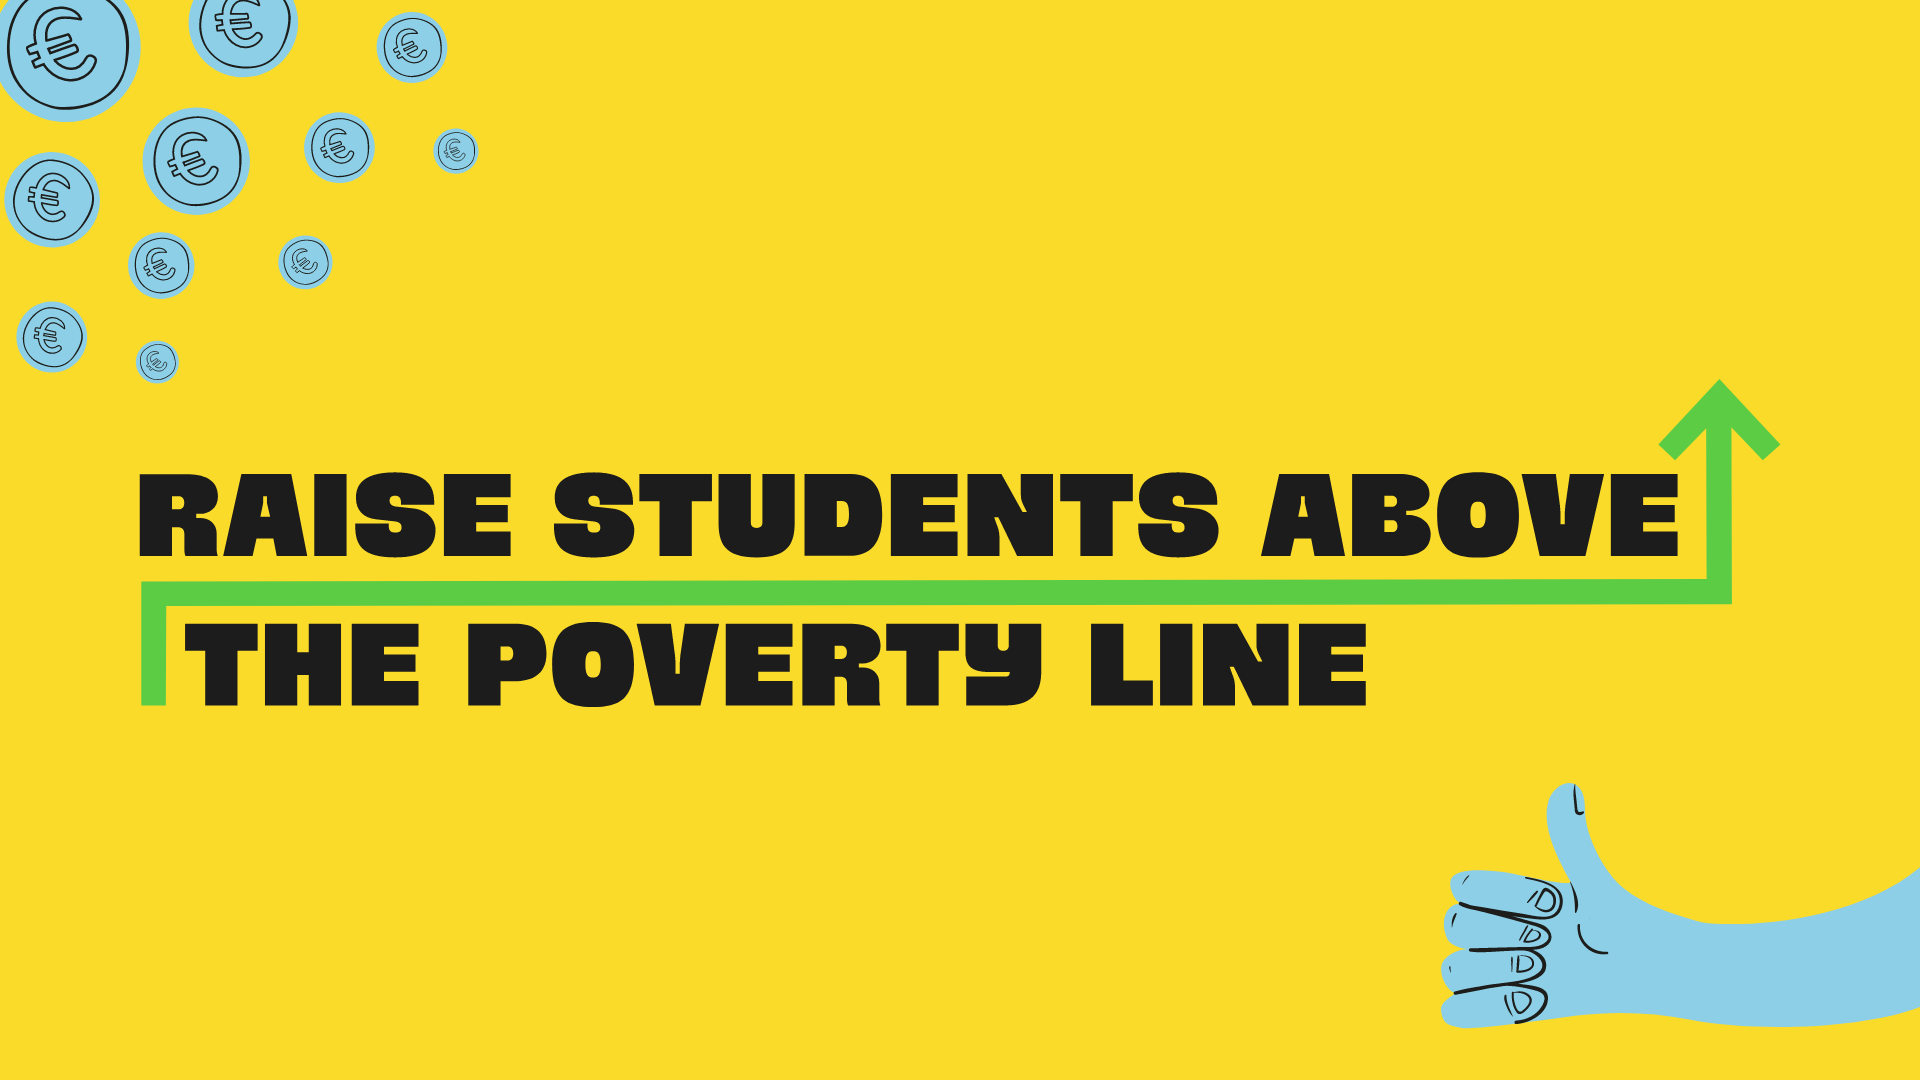 Let’s raise students #AboveThePovertyLine!